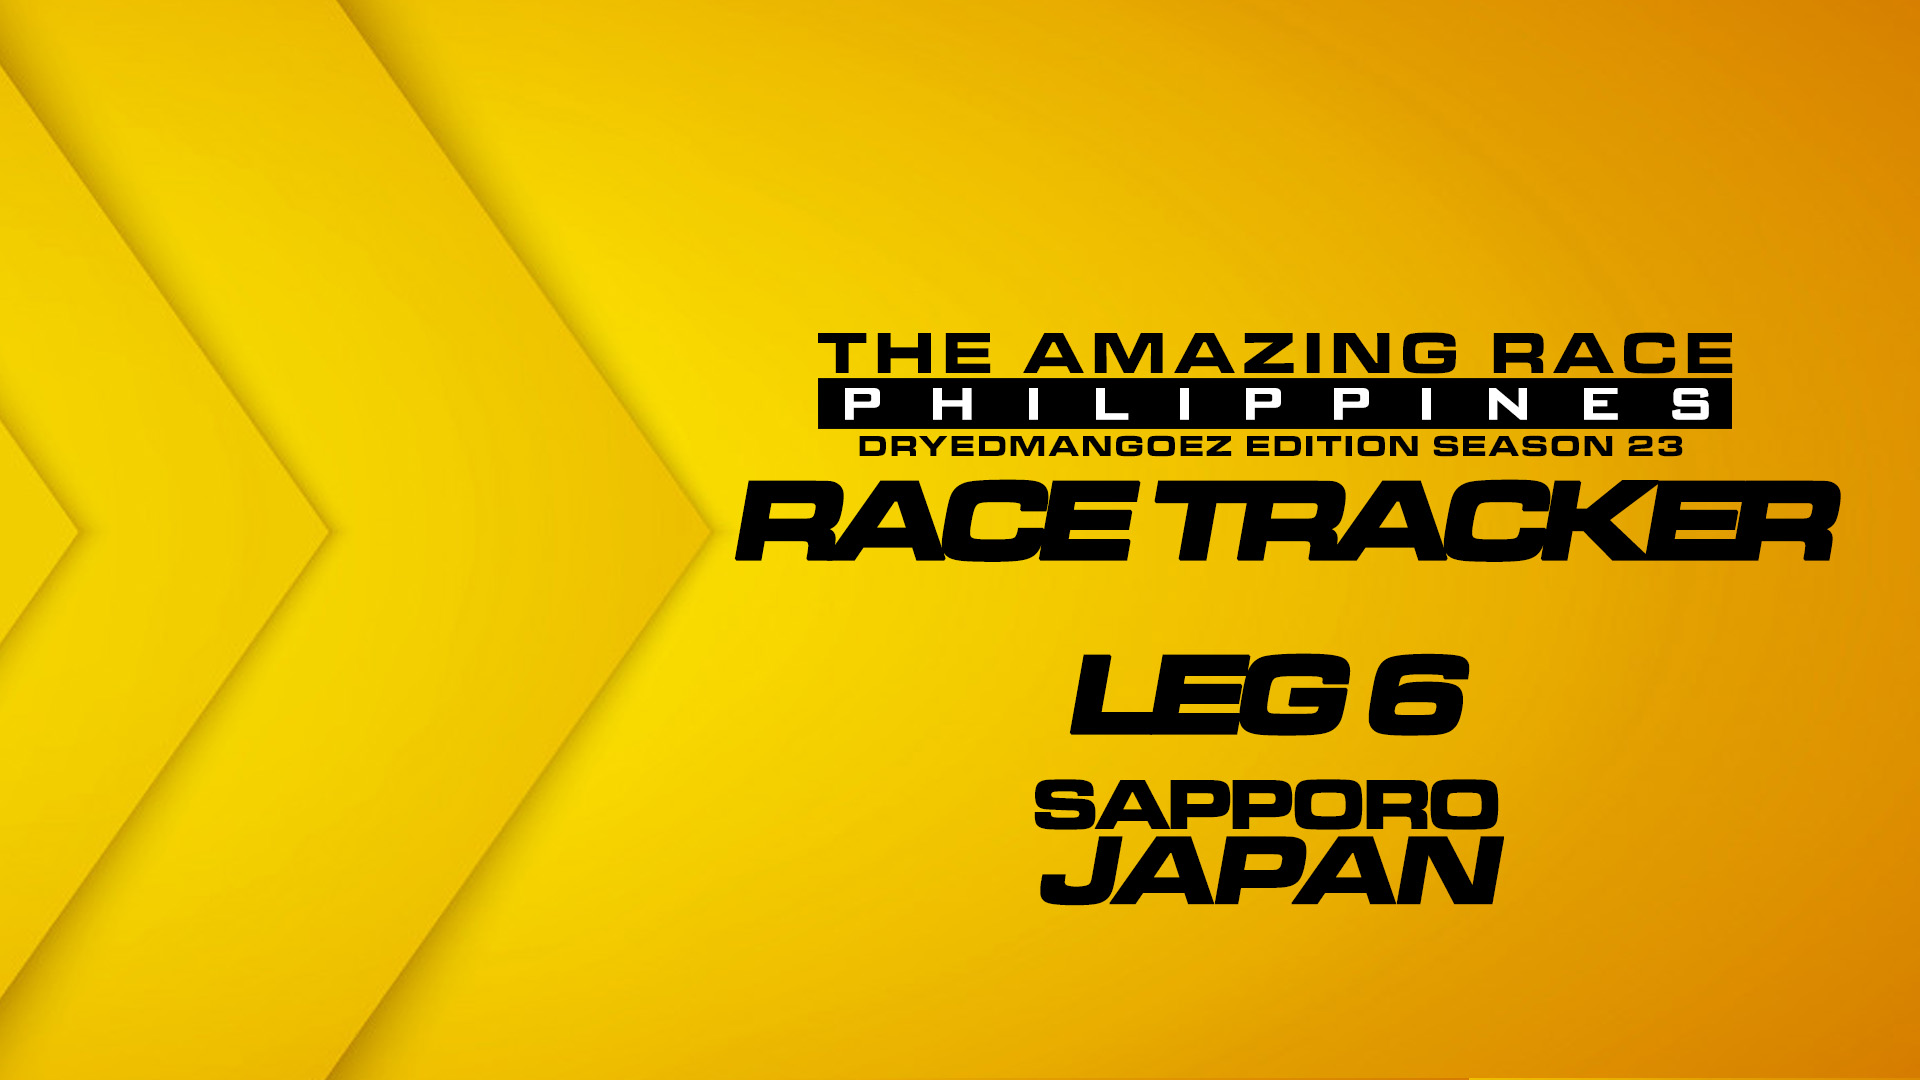 The Amazing Race Philippines: DryedMangoez Edition Season 23 Race Tracker – Leg 6